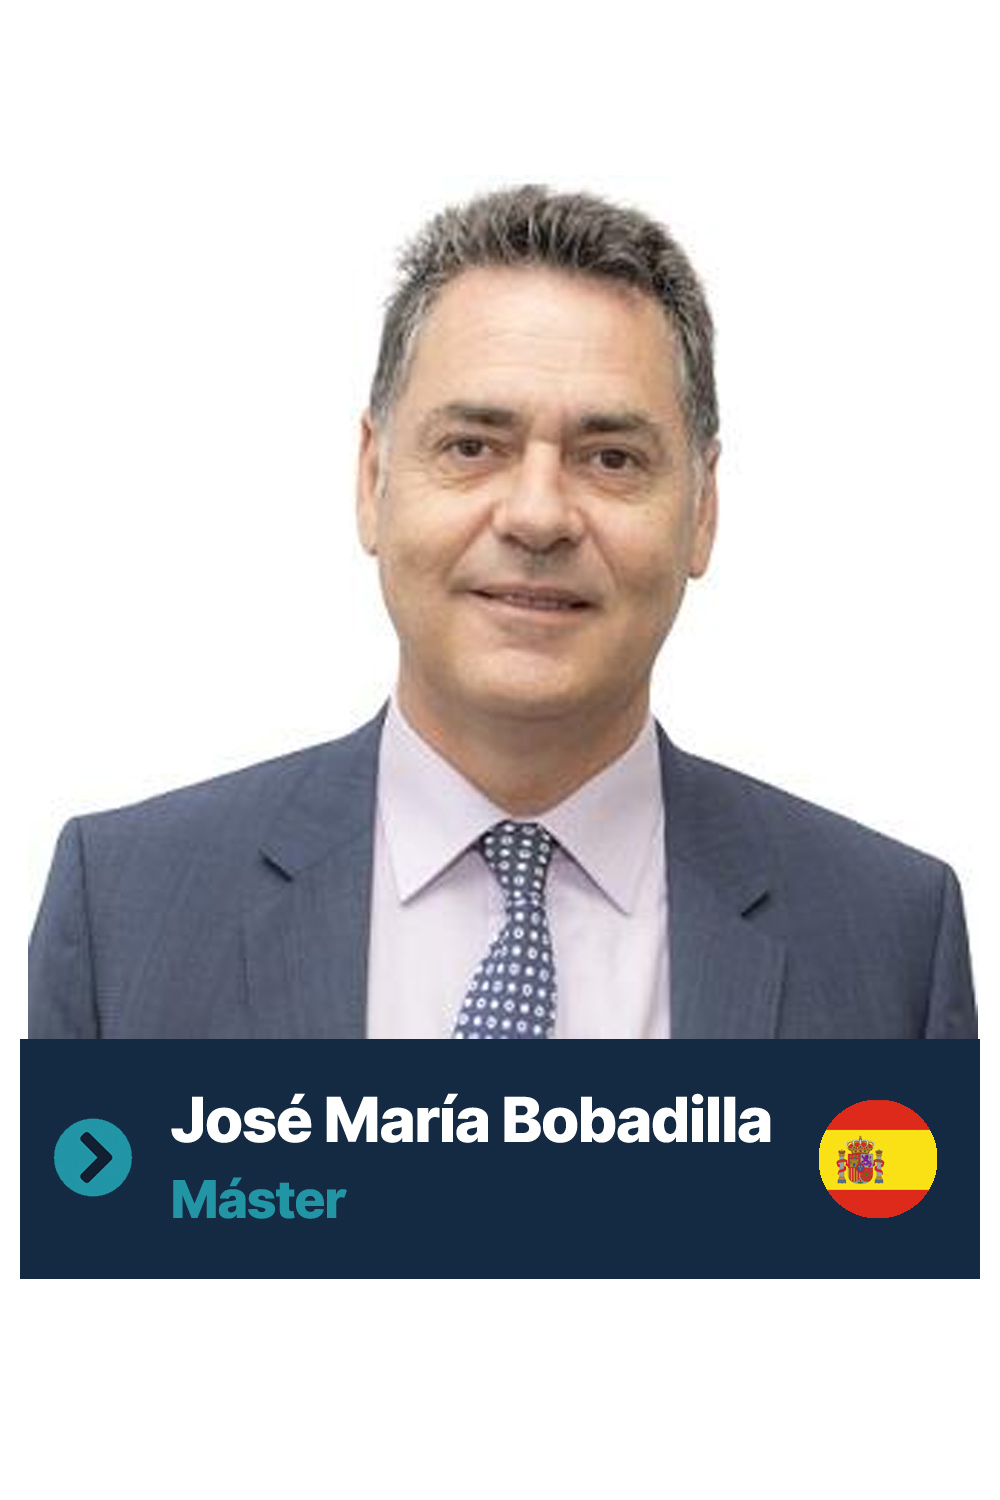 José María Bobadilla